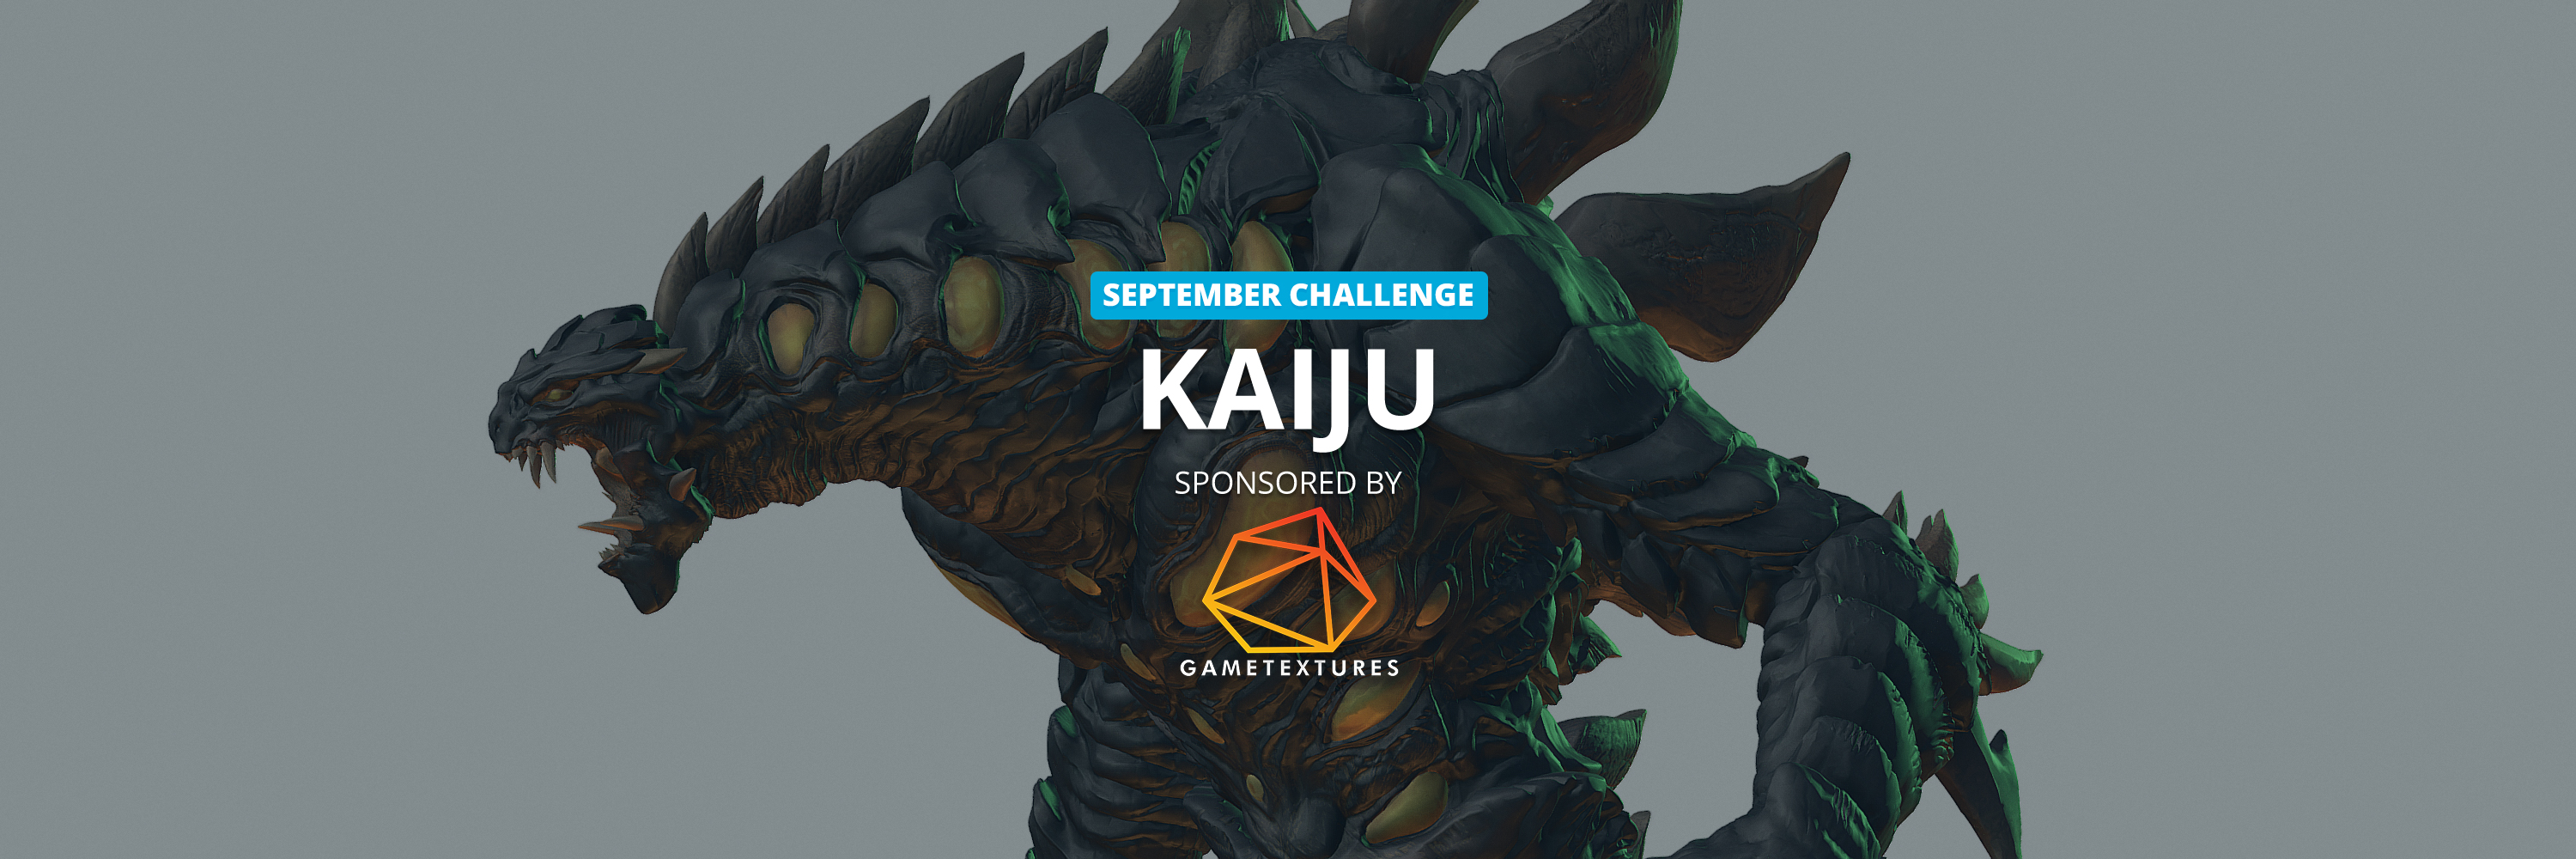 kaiju-challenge header image